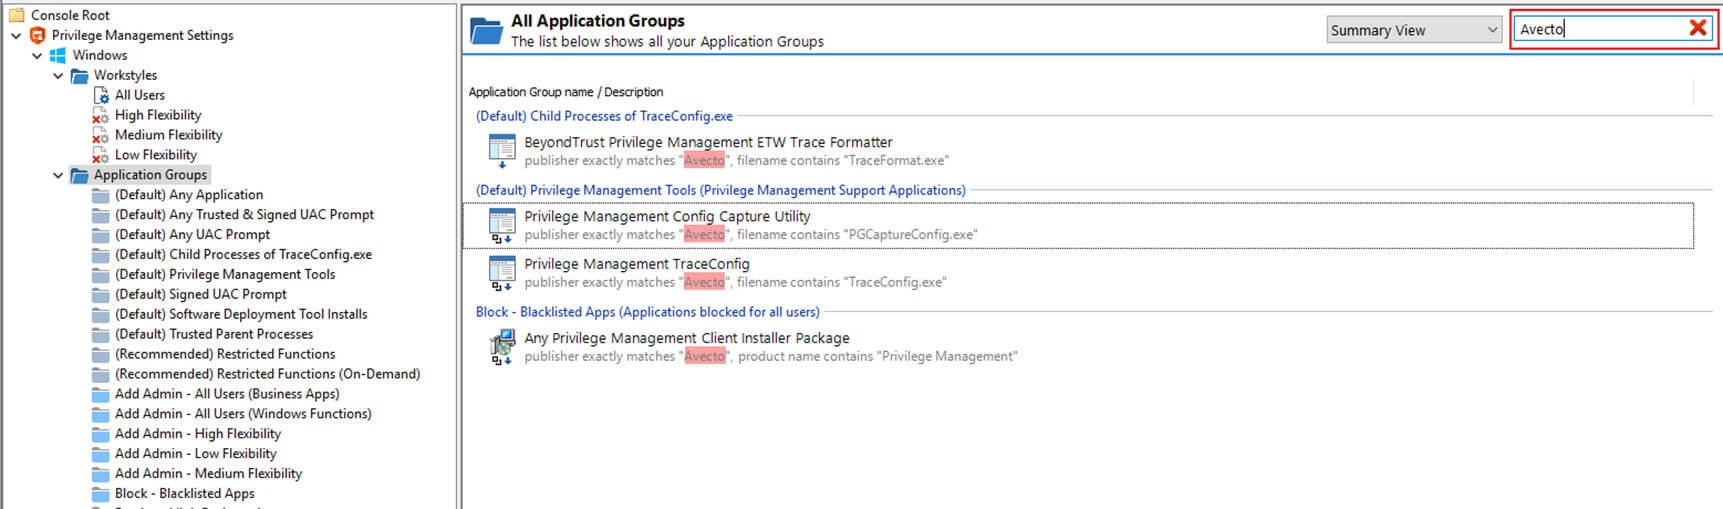 Search application groups in an upgrade scenario